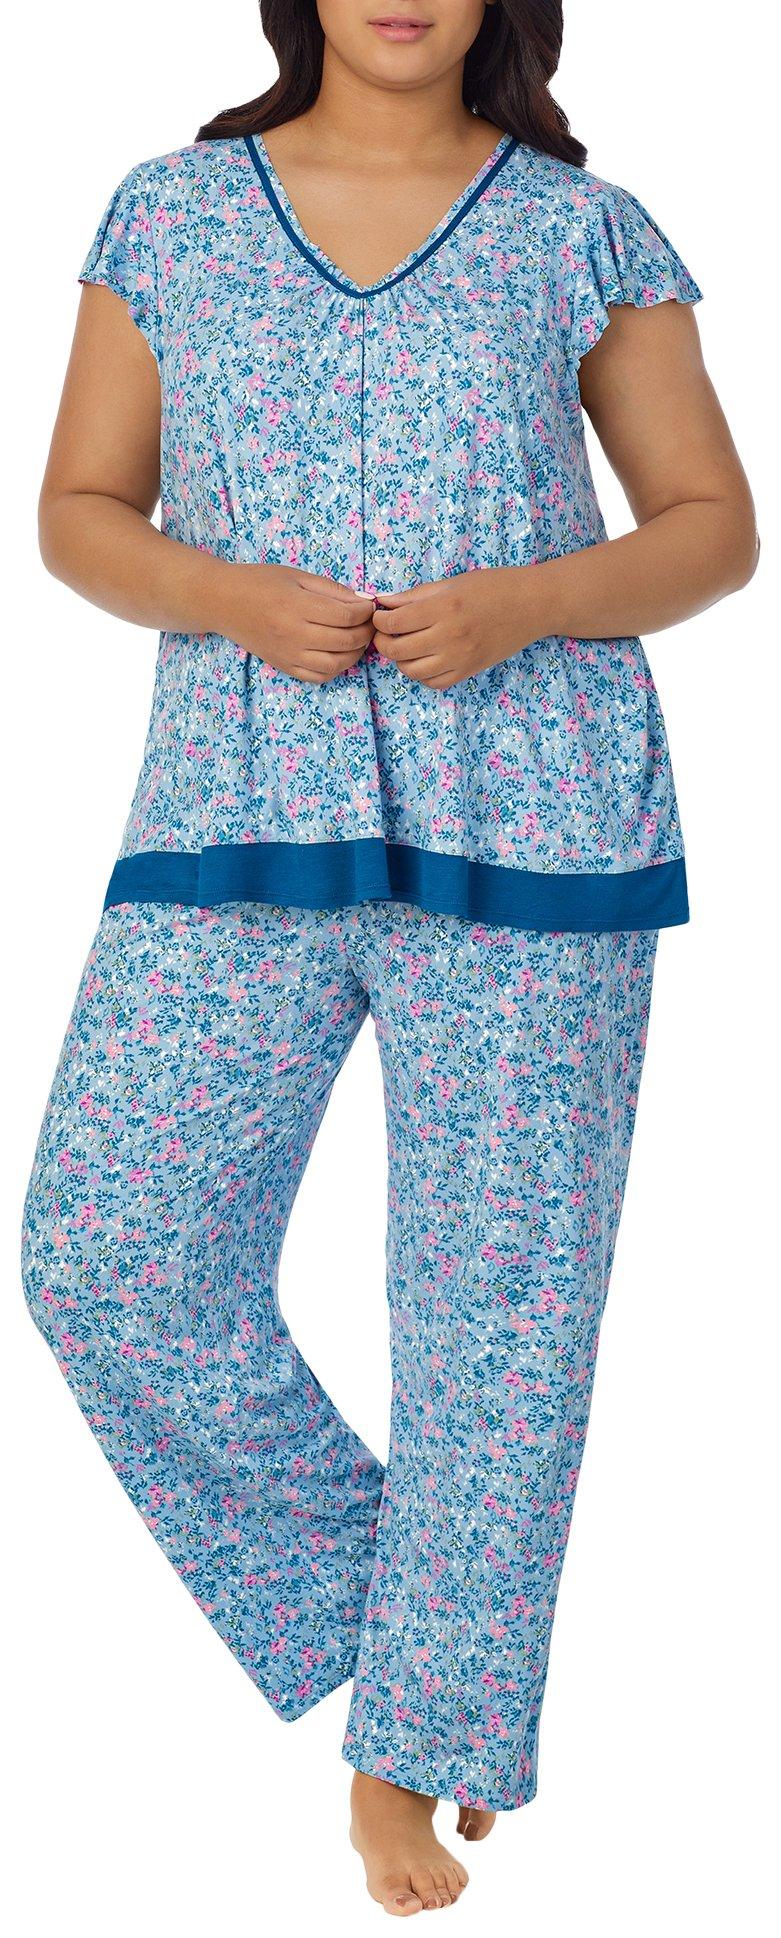 Mattel Womens' Barbie Logo All Over Print Loungewear Sleep Pajama